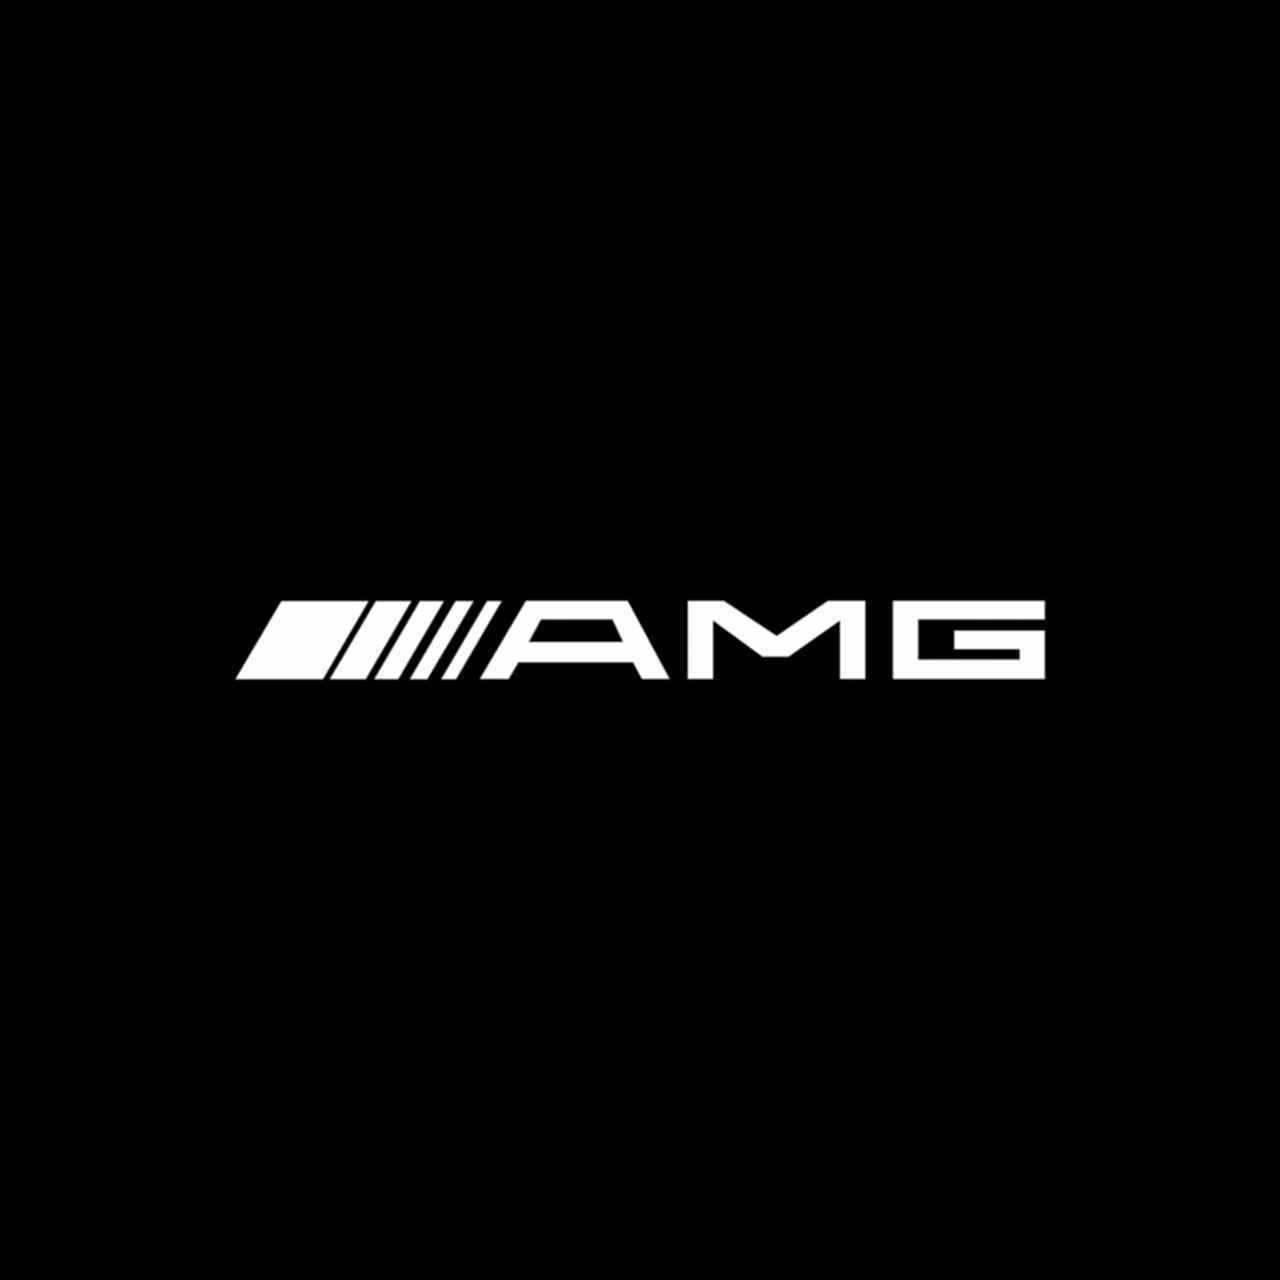 Pair the World of Mercedes Benz AMG Vinyl Car Auto Logo Decal Sticker